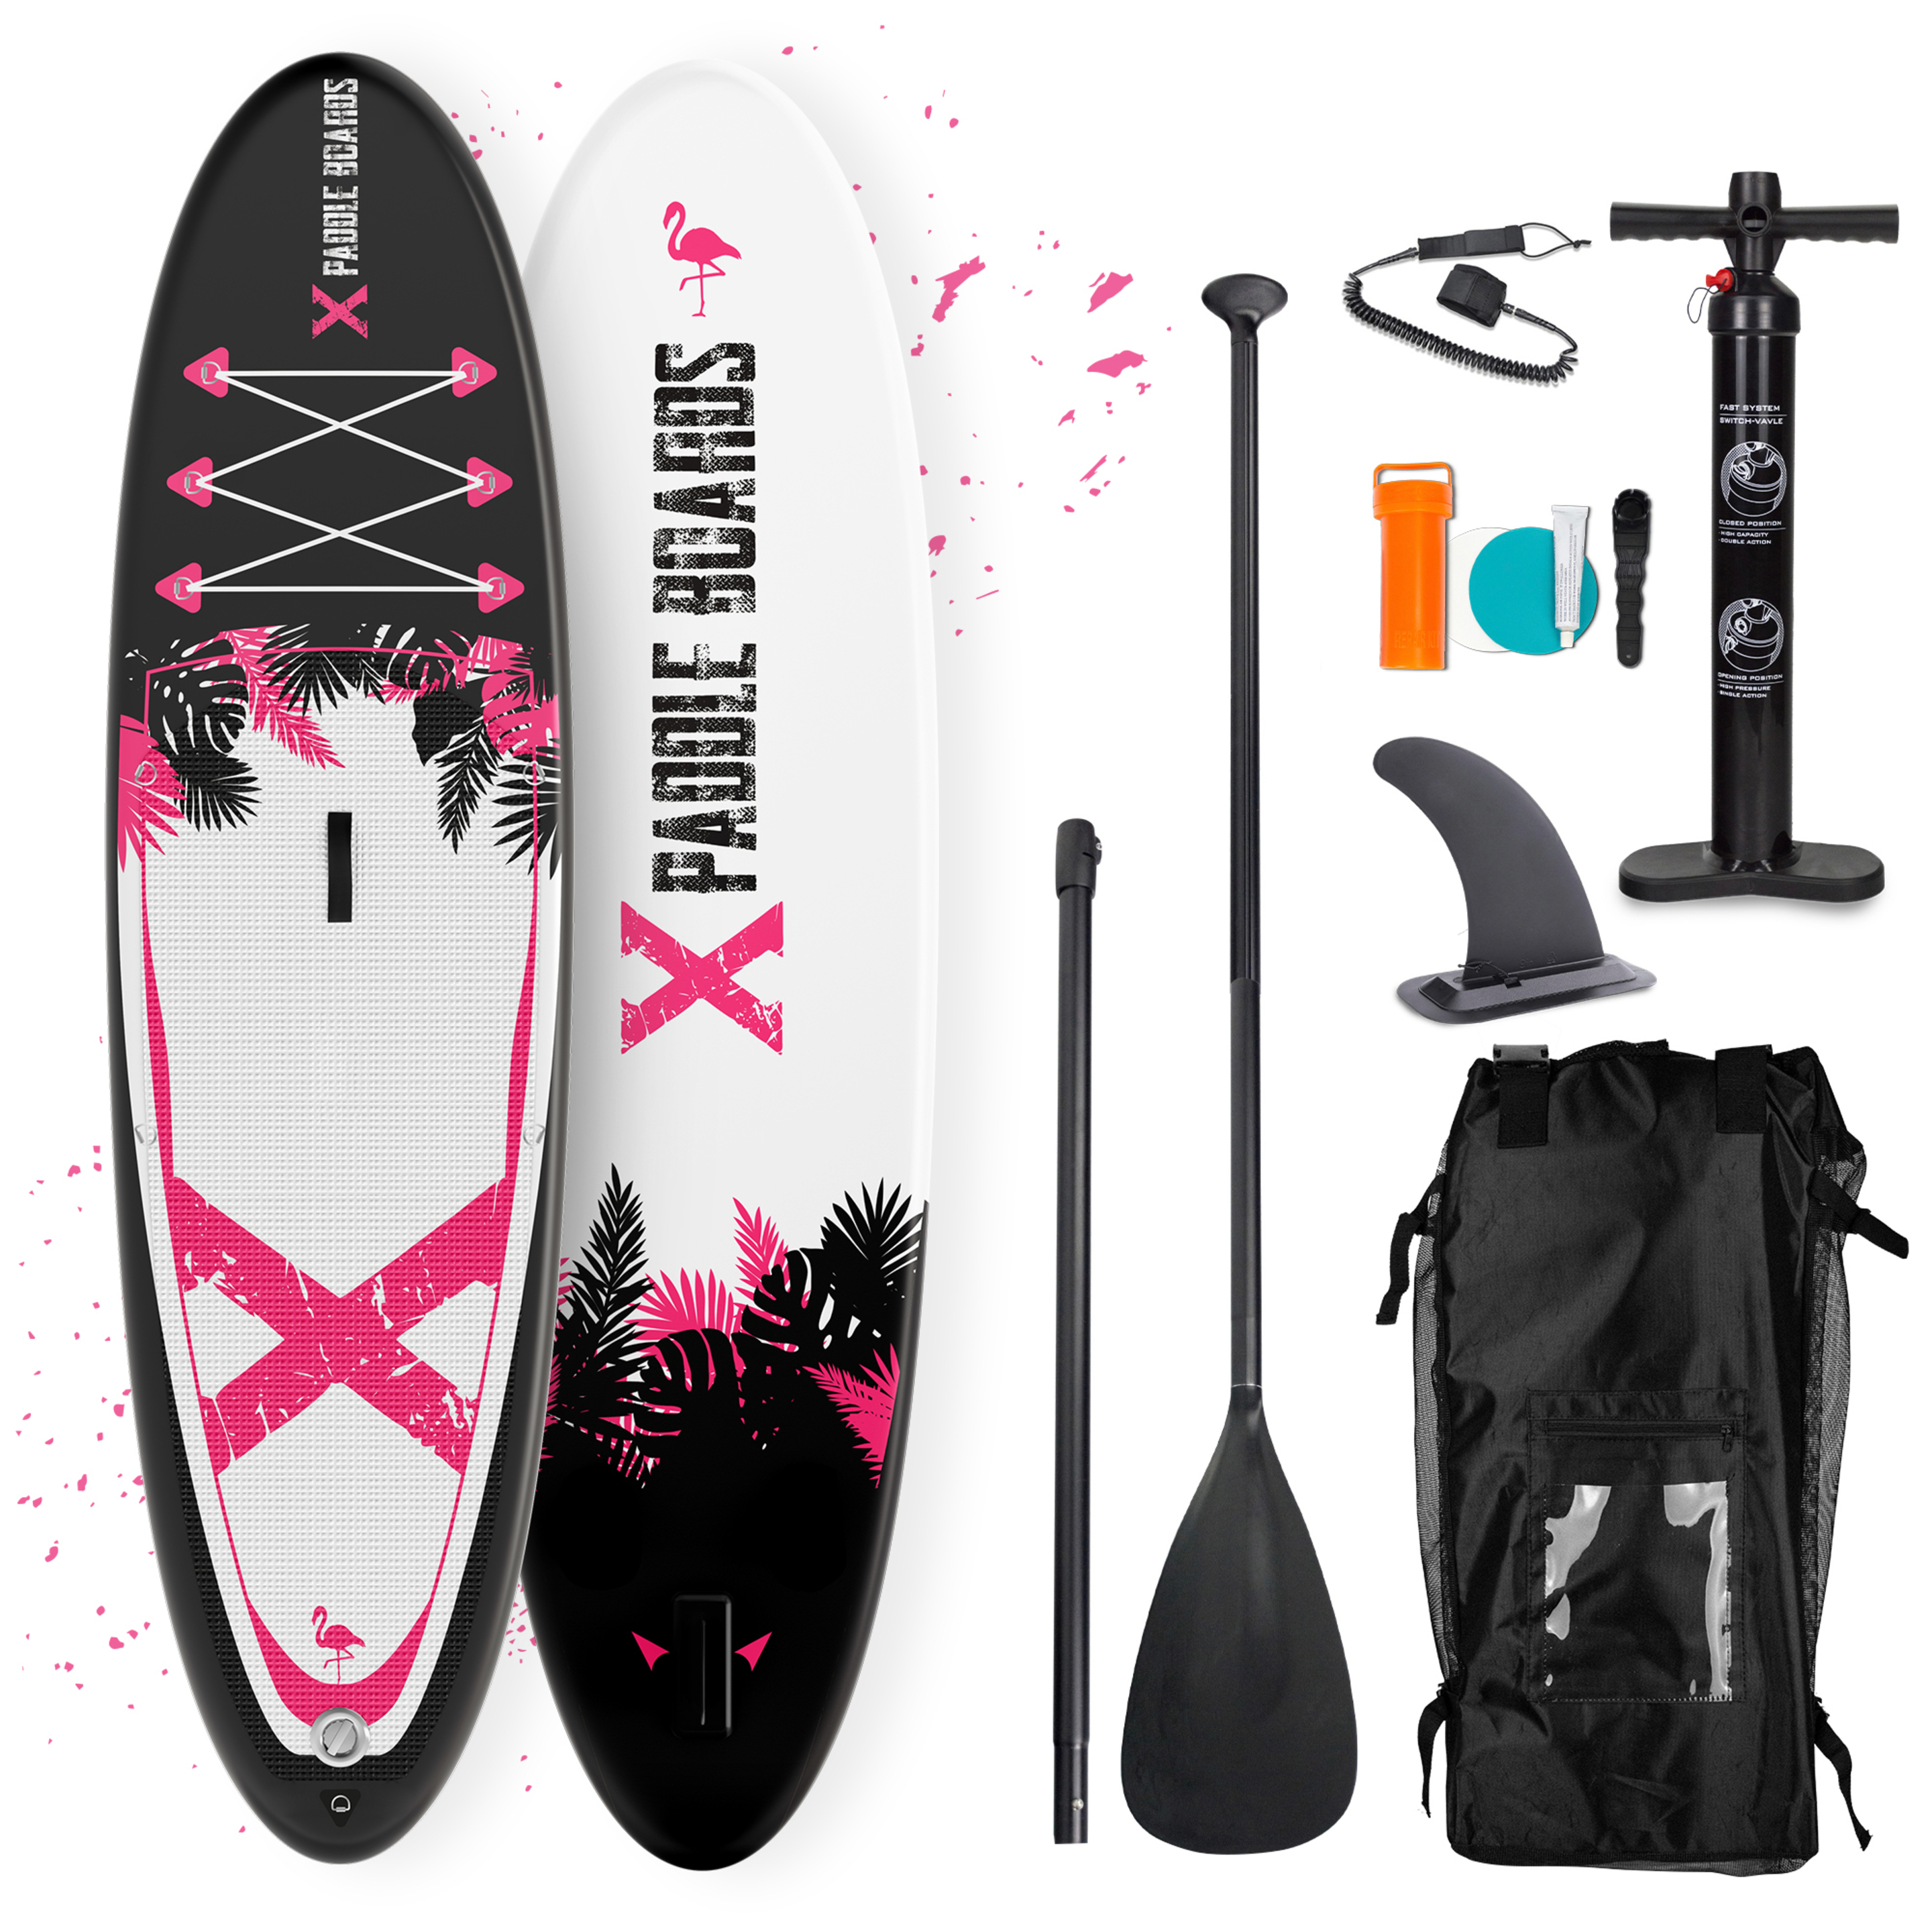 Tabla De Paddle Surf Hinchable  X-flamingo  310 X 82 X 15cm - Negro/Rosa  MKP